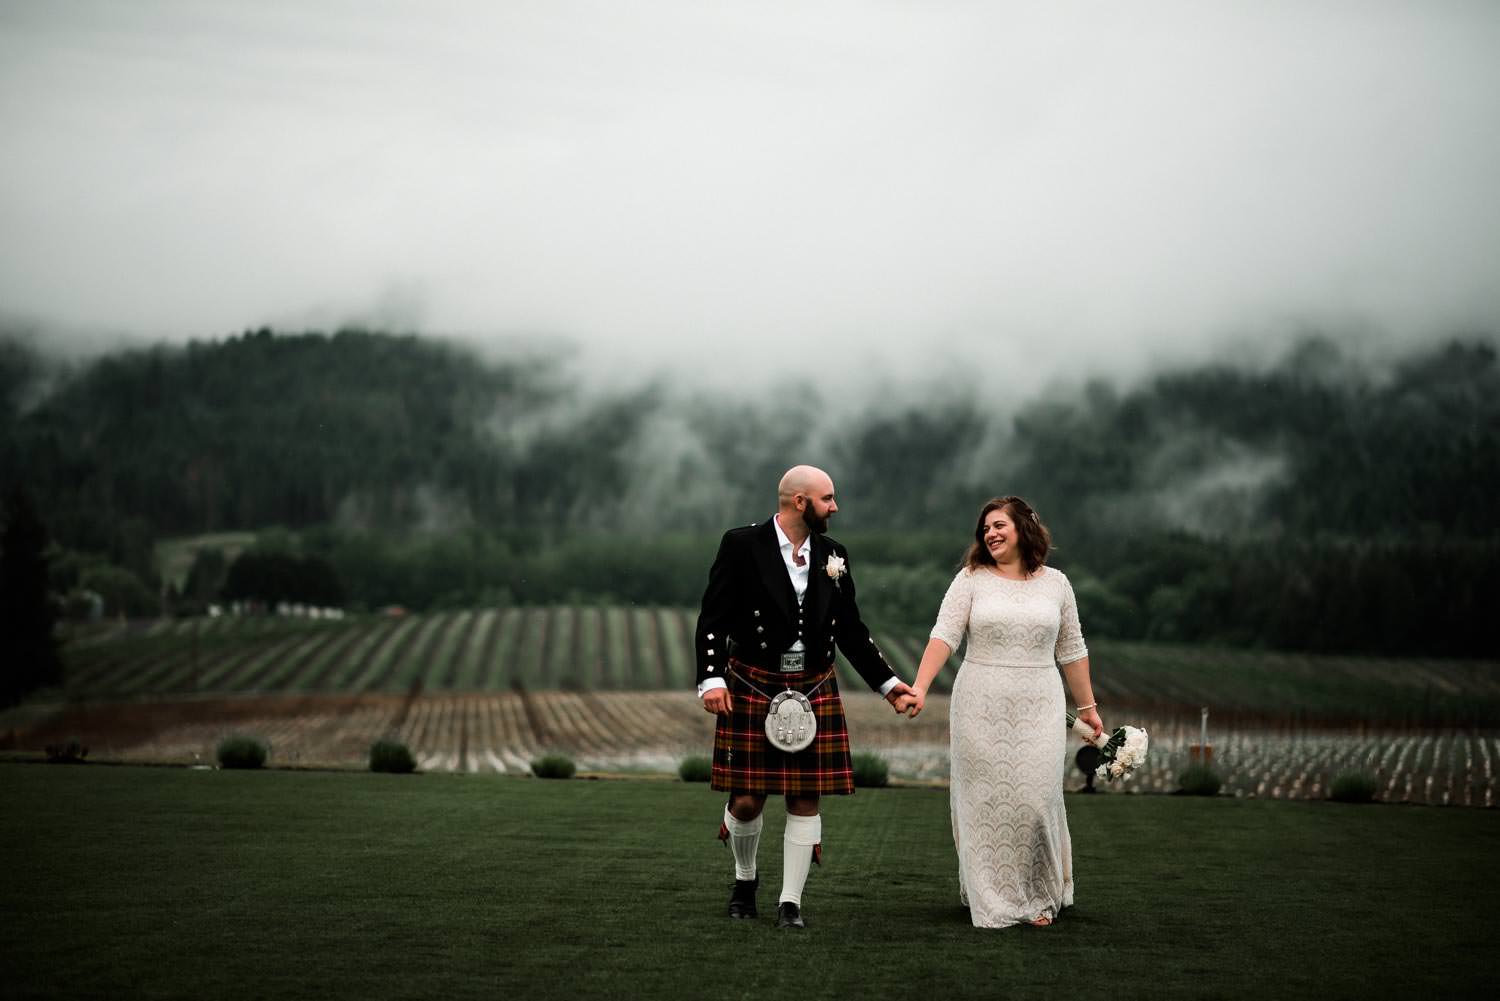 Bride and groom walking in the foggy vineyard after their wedding ceremony at Abbey Road Farm Wedding venue in Carlton Oregon.